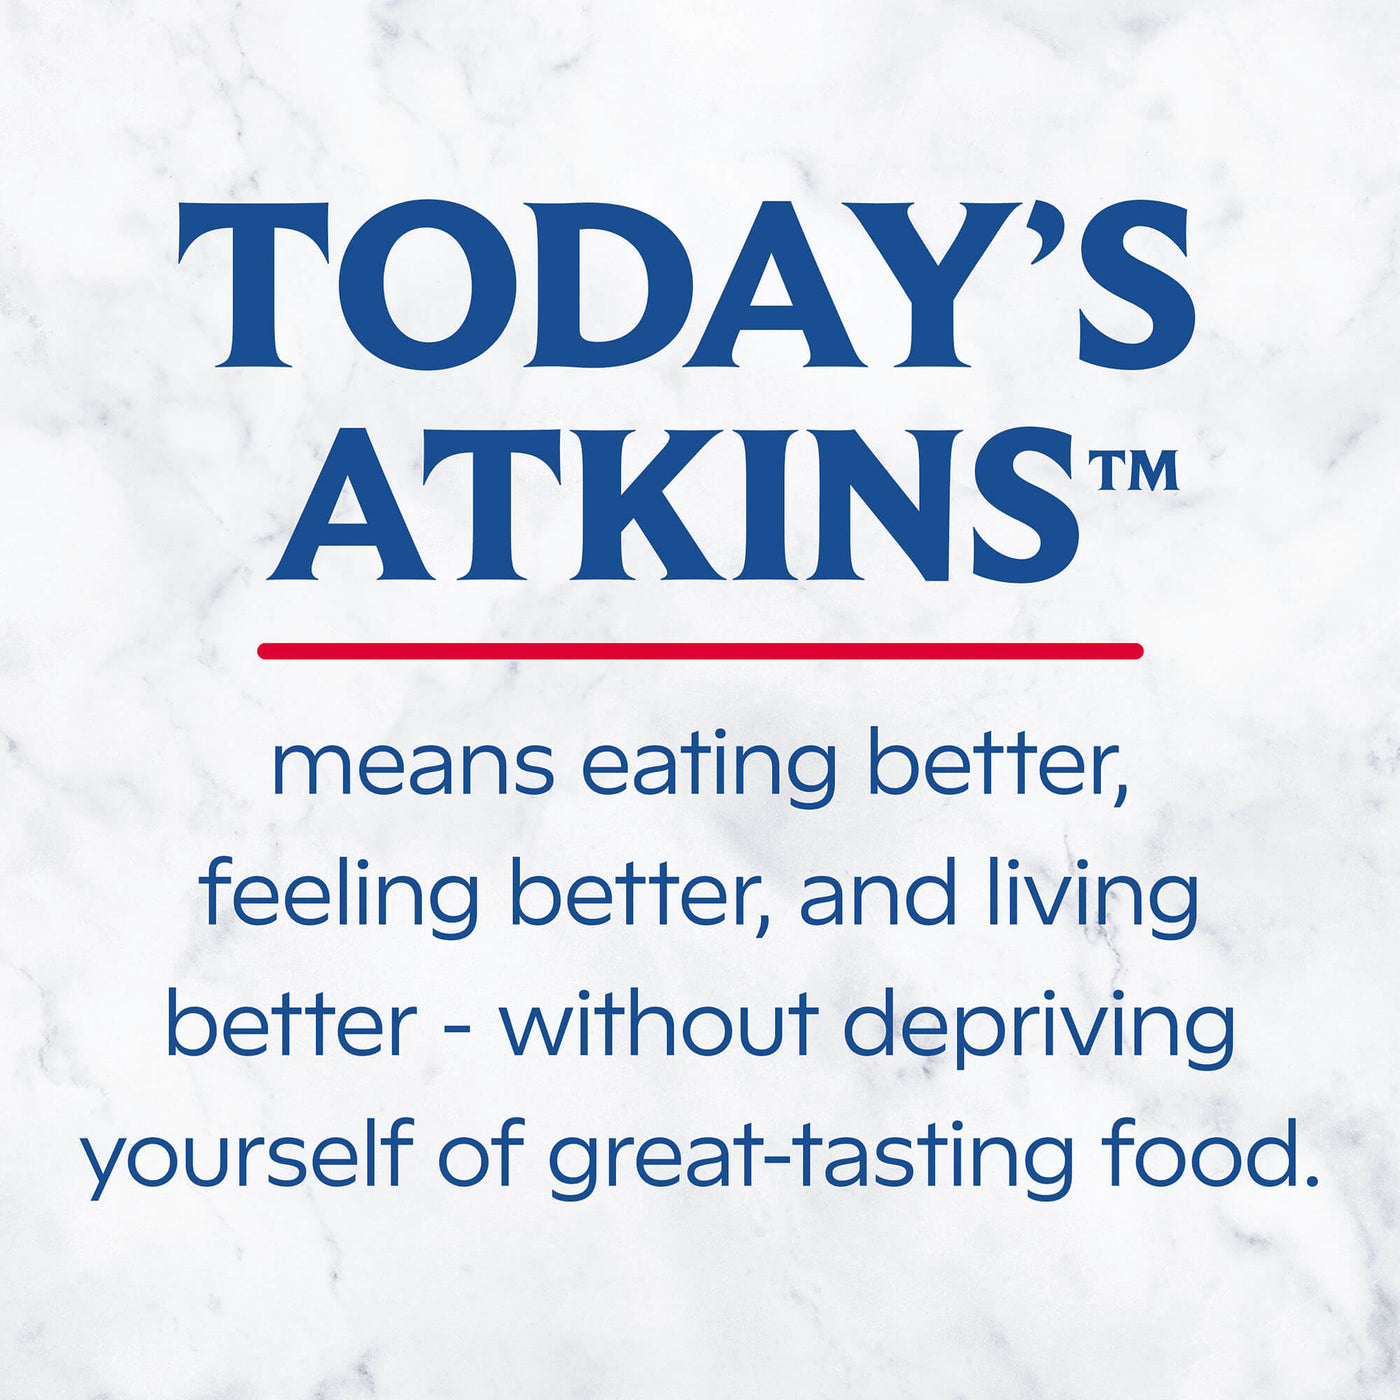 Peanut Butter Wafer Crisps-Today's Atkins means eating better, feeling better, and living better-without depriving yourdelf of great-tasting food.